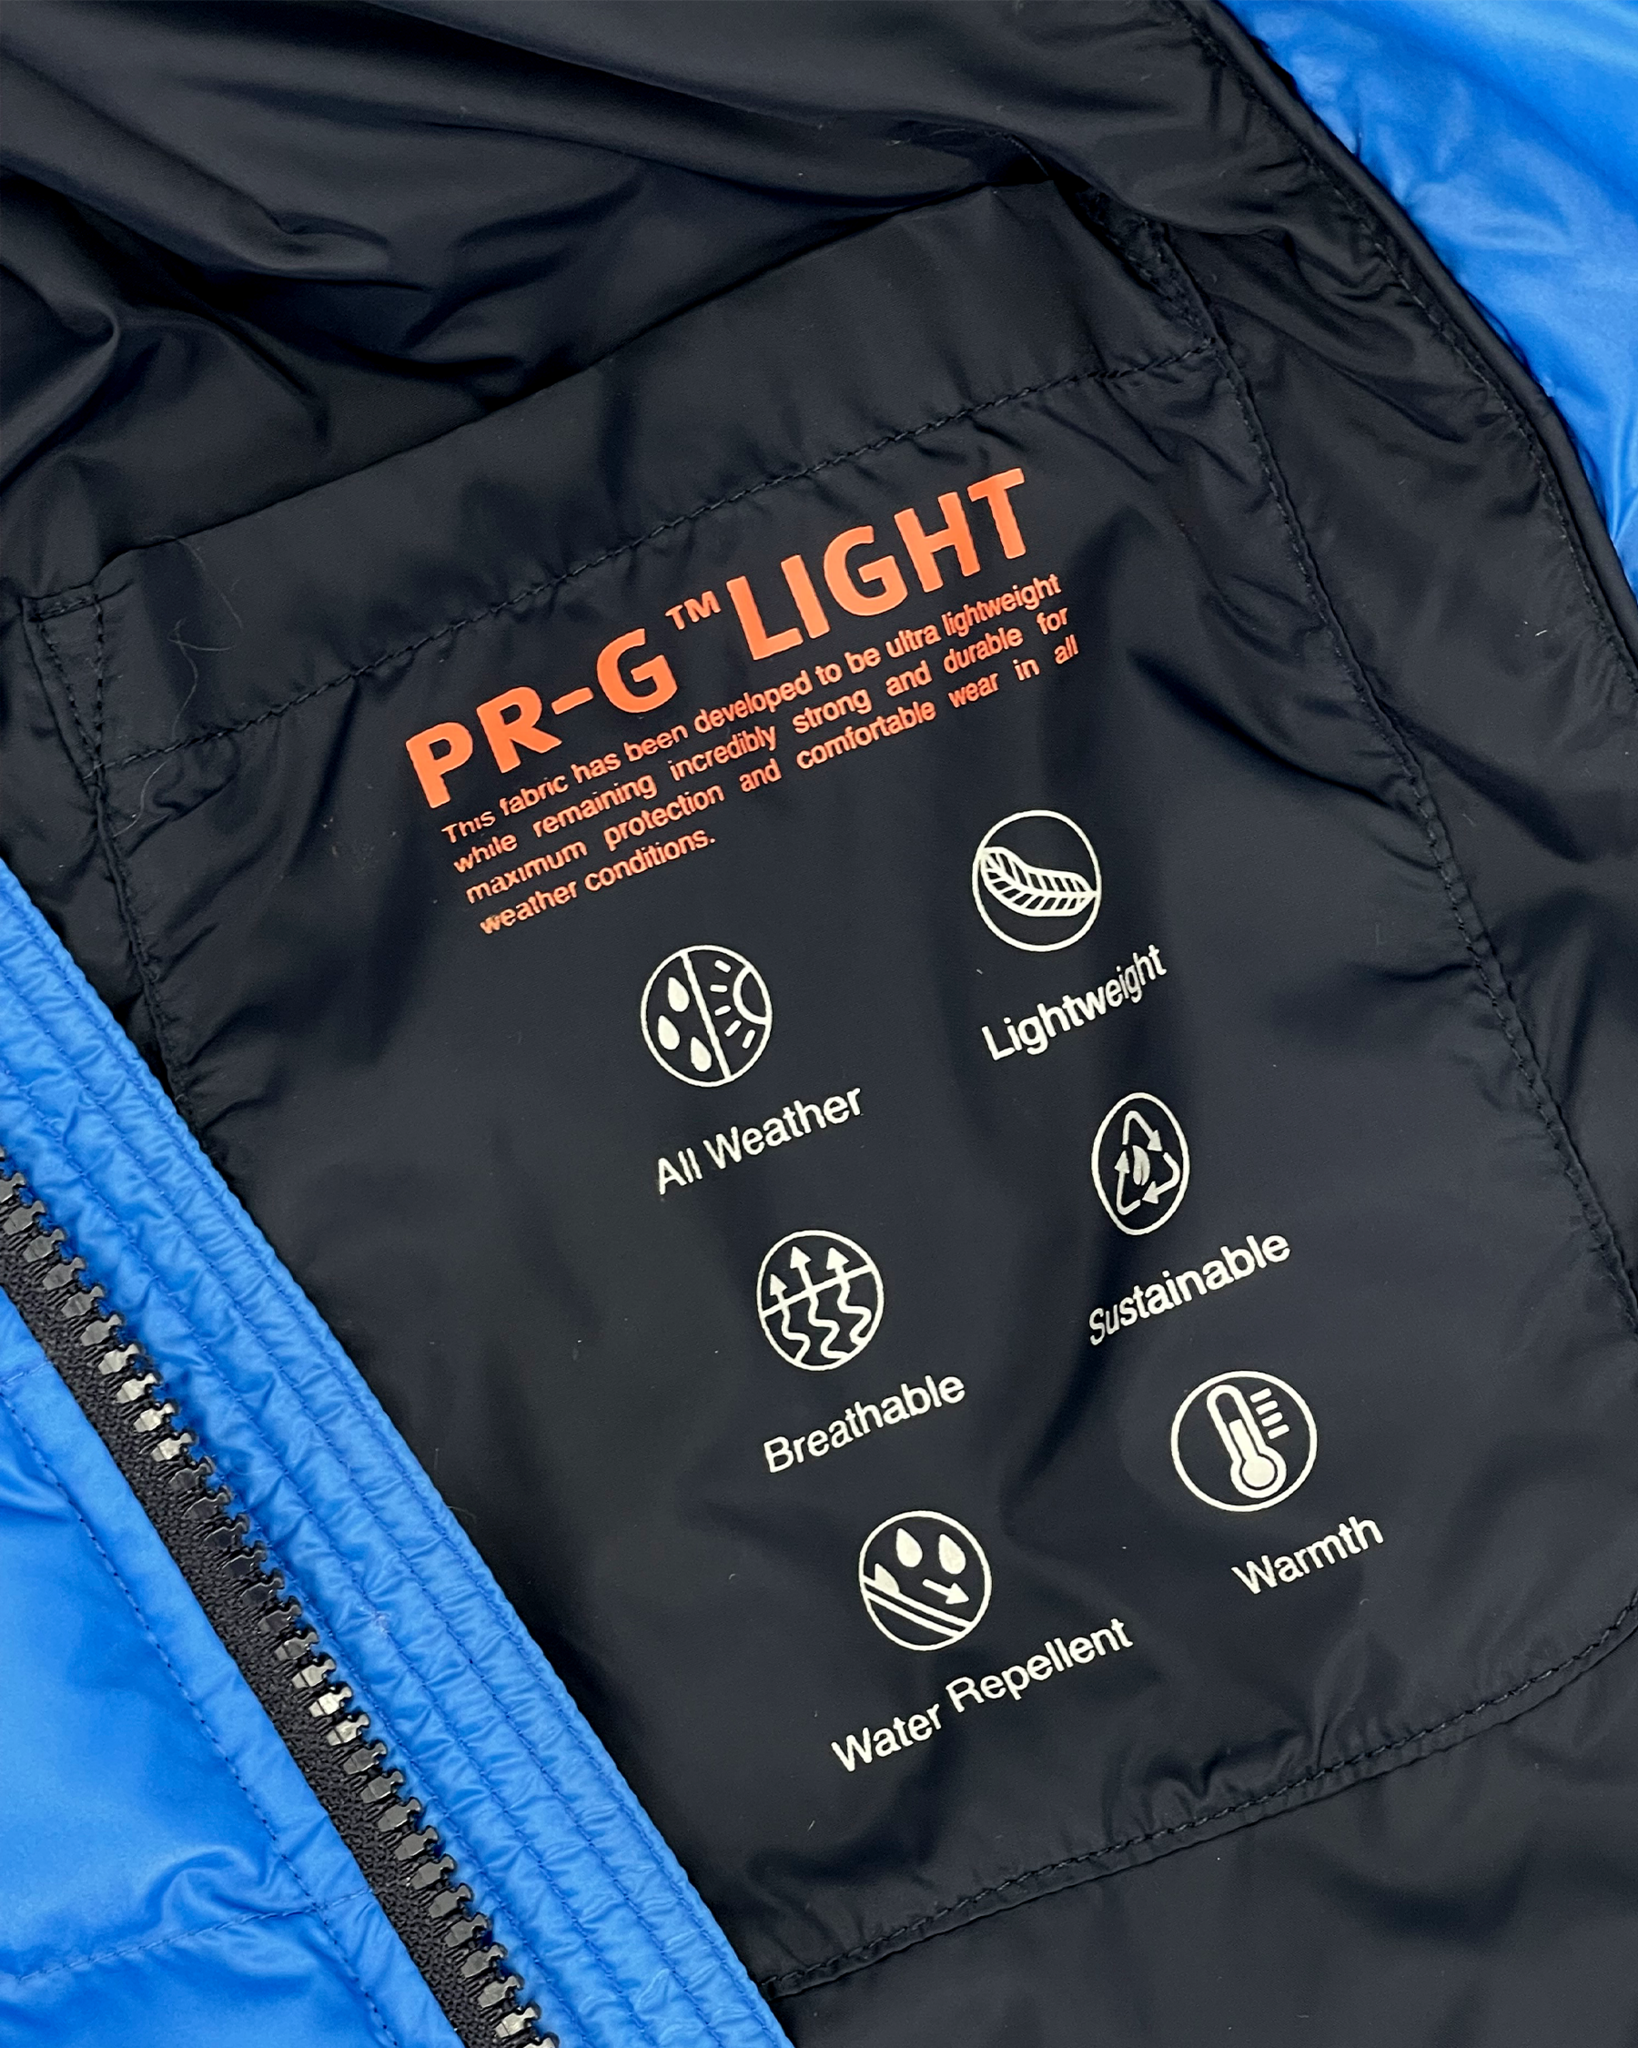 PR-G™ light Atlantique bodywarmer